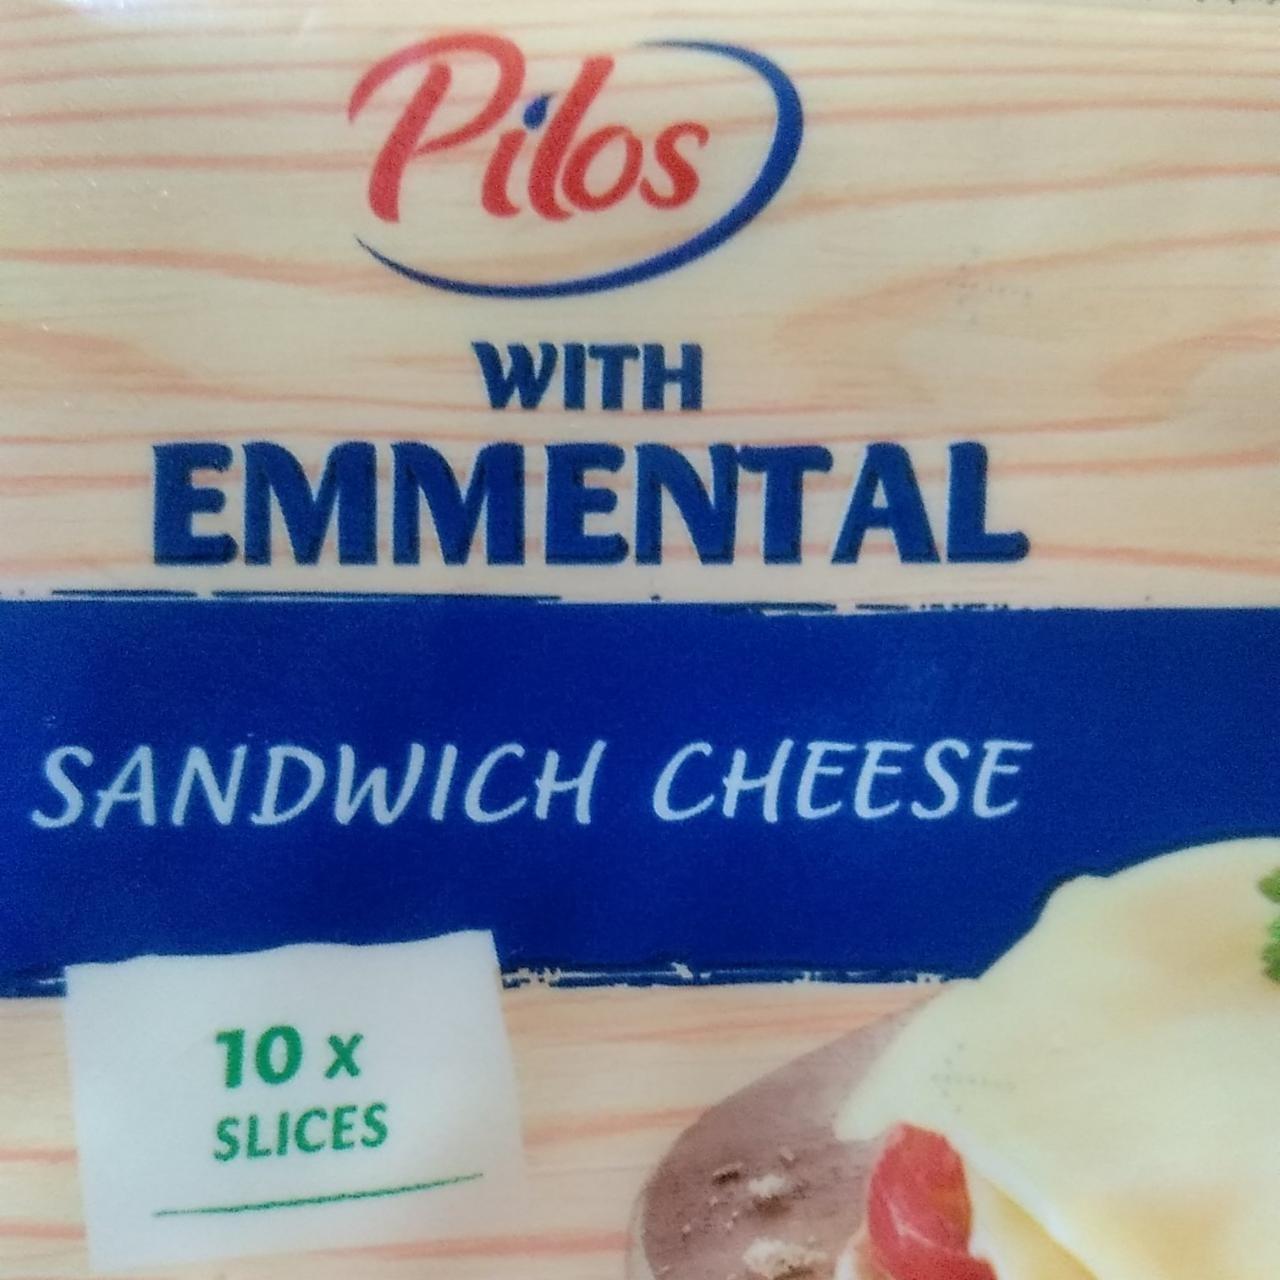 Képek - Sandwich cheese with Emmental Pilos